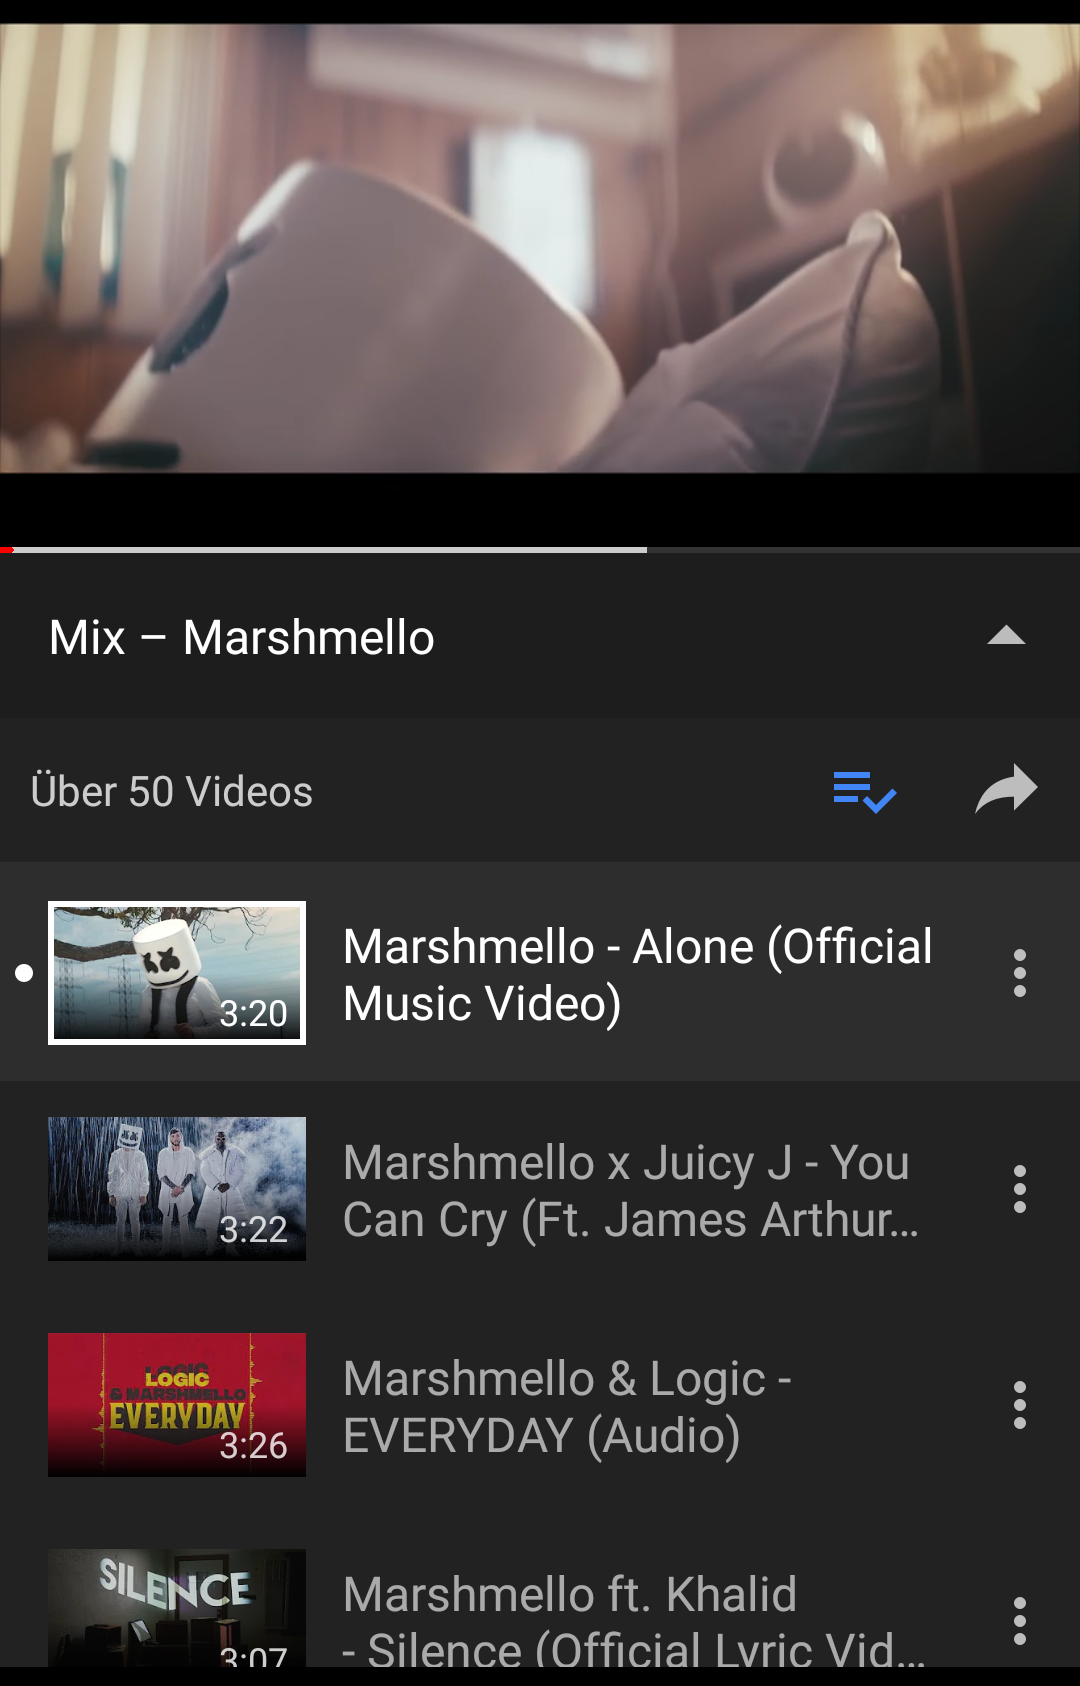 Marshmello & Logic - EVERYDAY (Audio) 